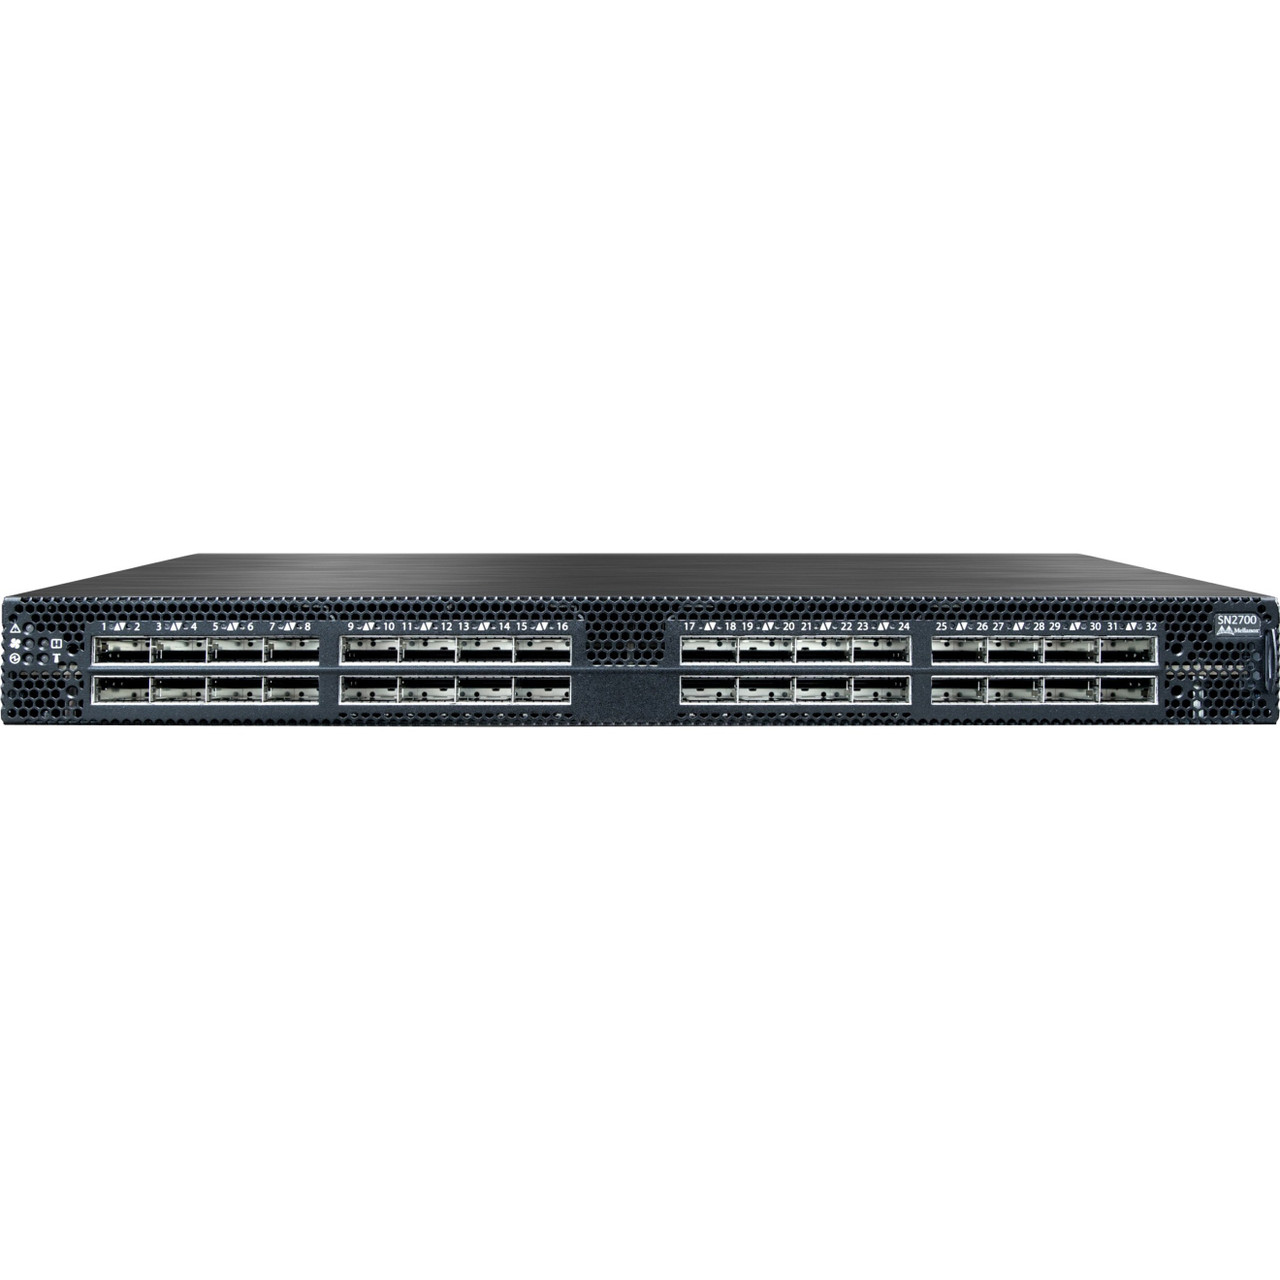 Nvidia-Mellanox SN2700 Open Ethernet Switch